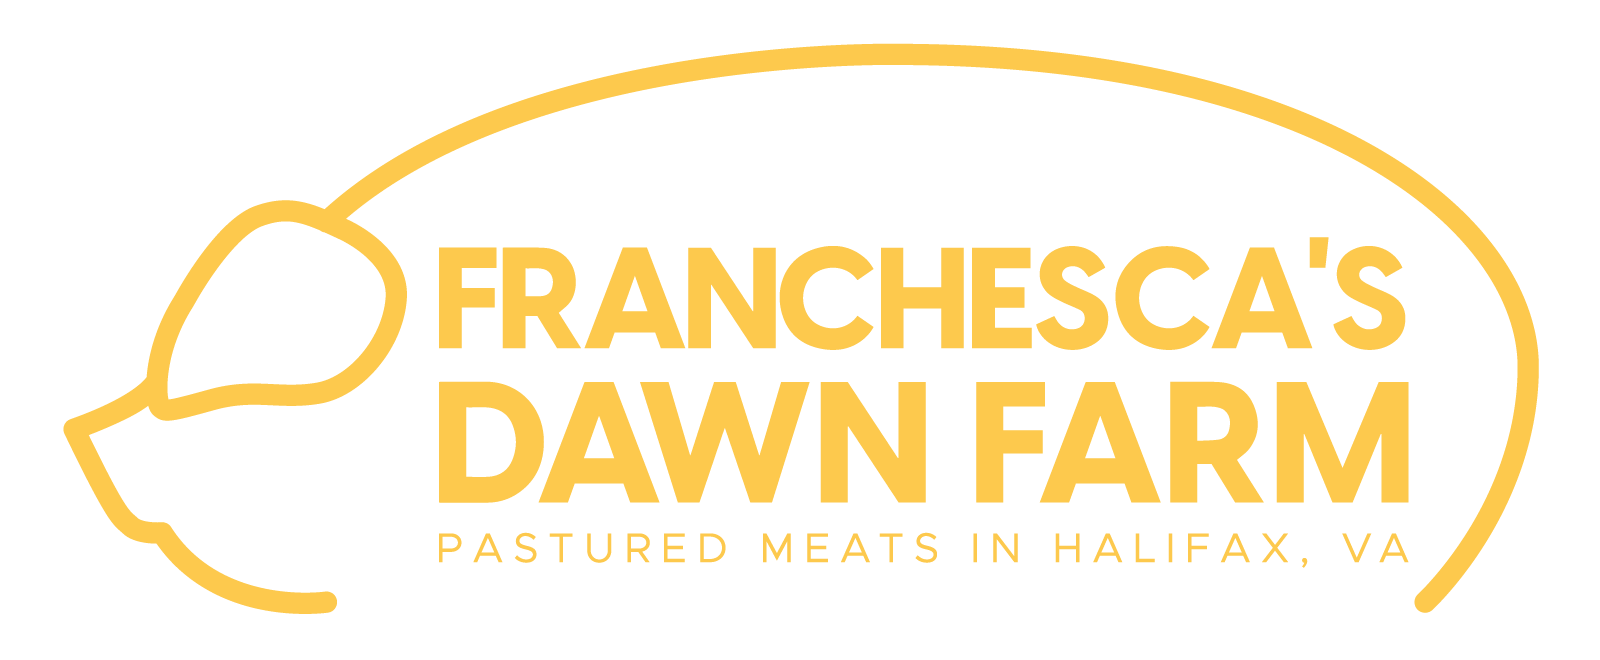 Franchesca’s Dawn Farm